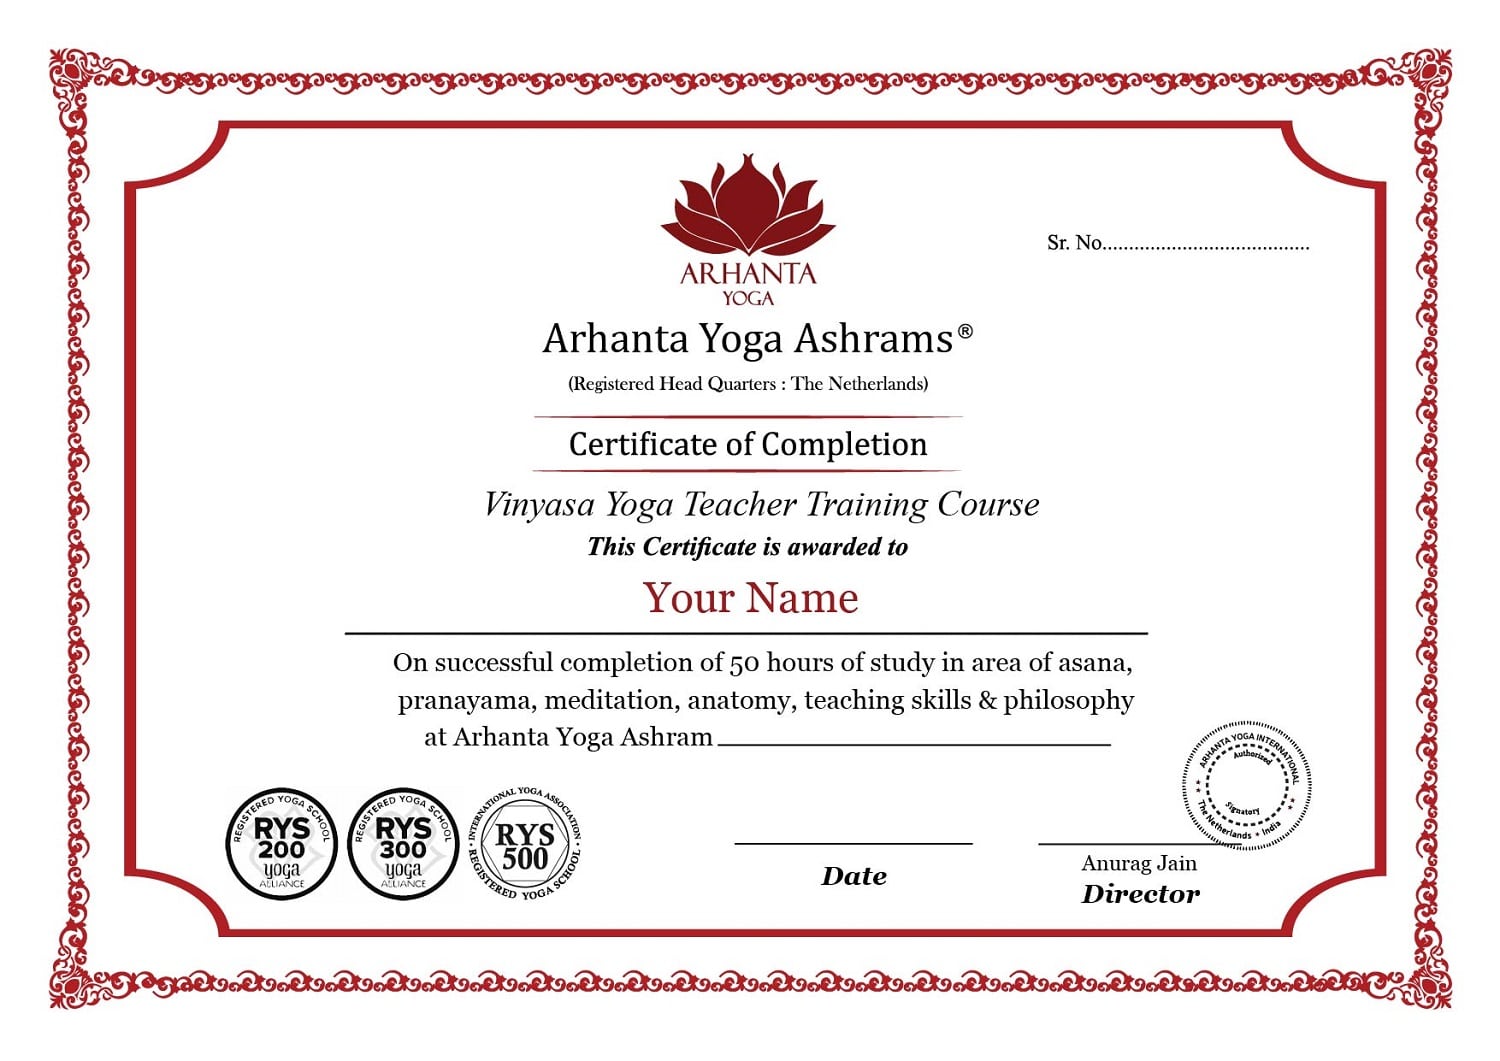 Certificat de formation de professeur de yoga Vinyasa